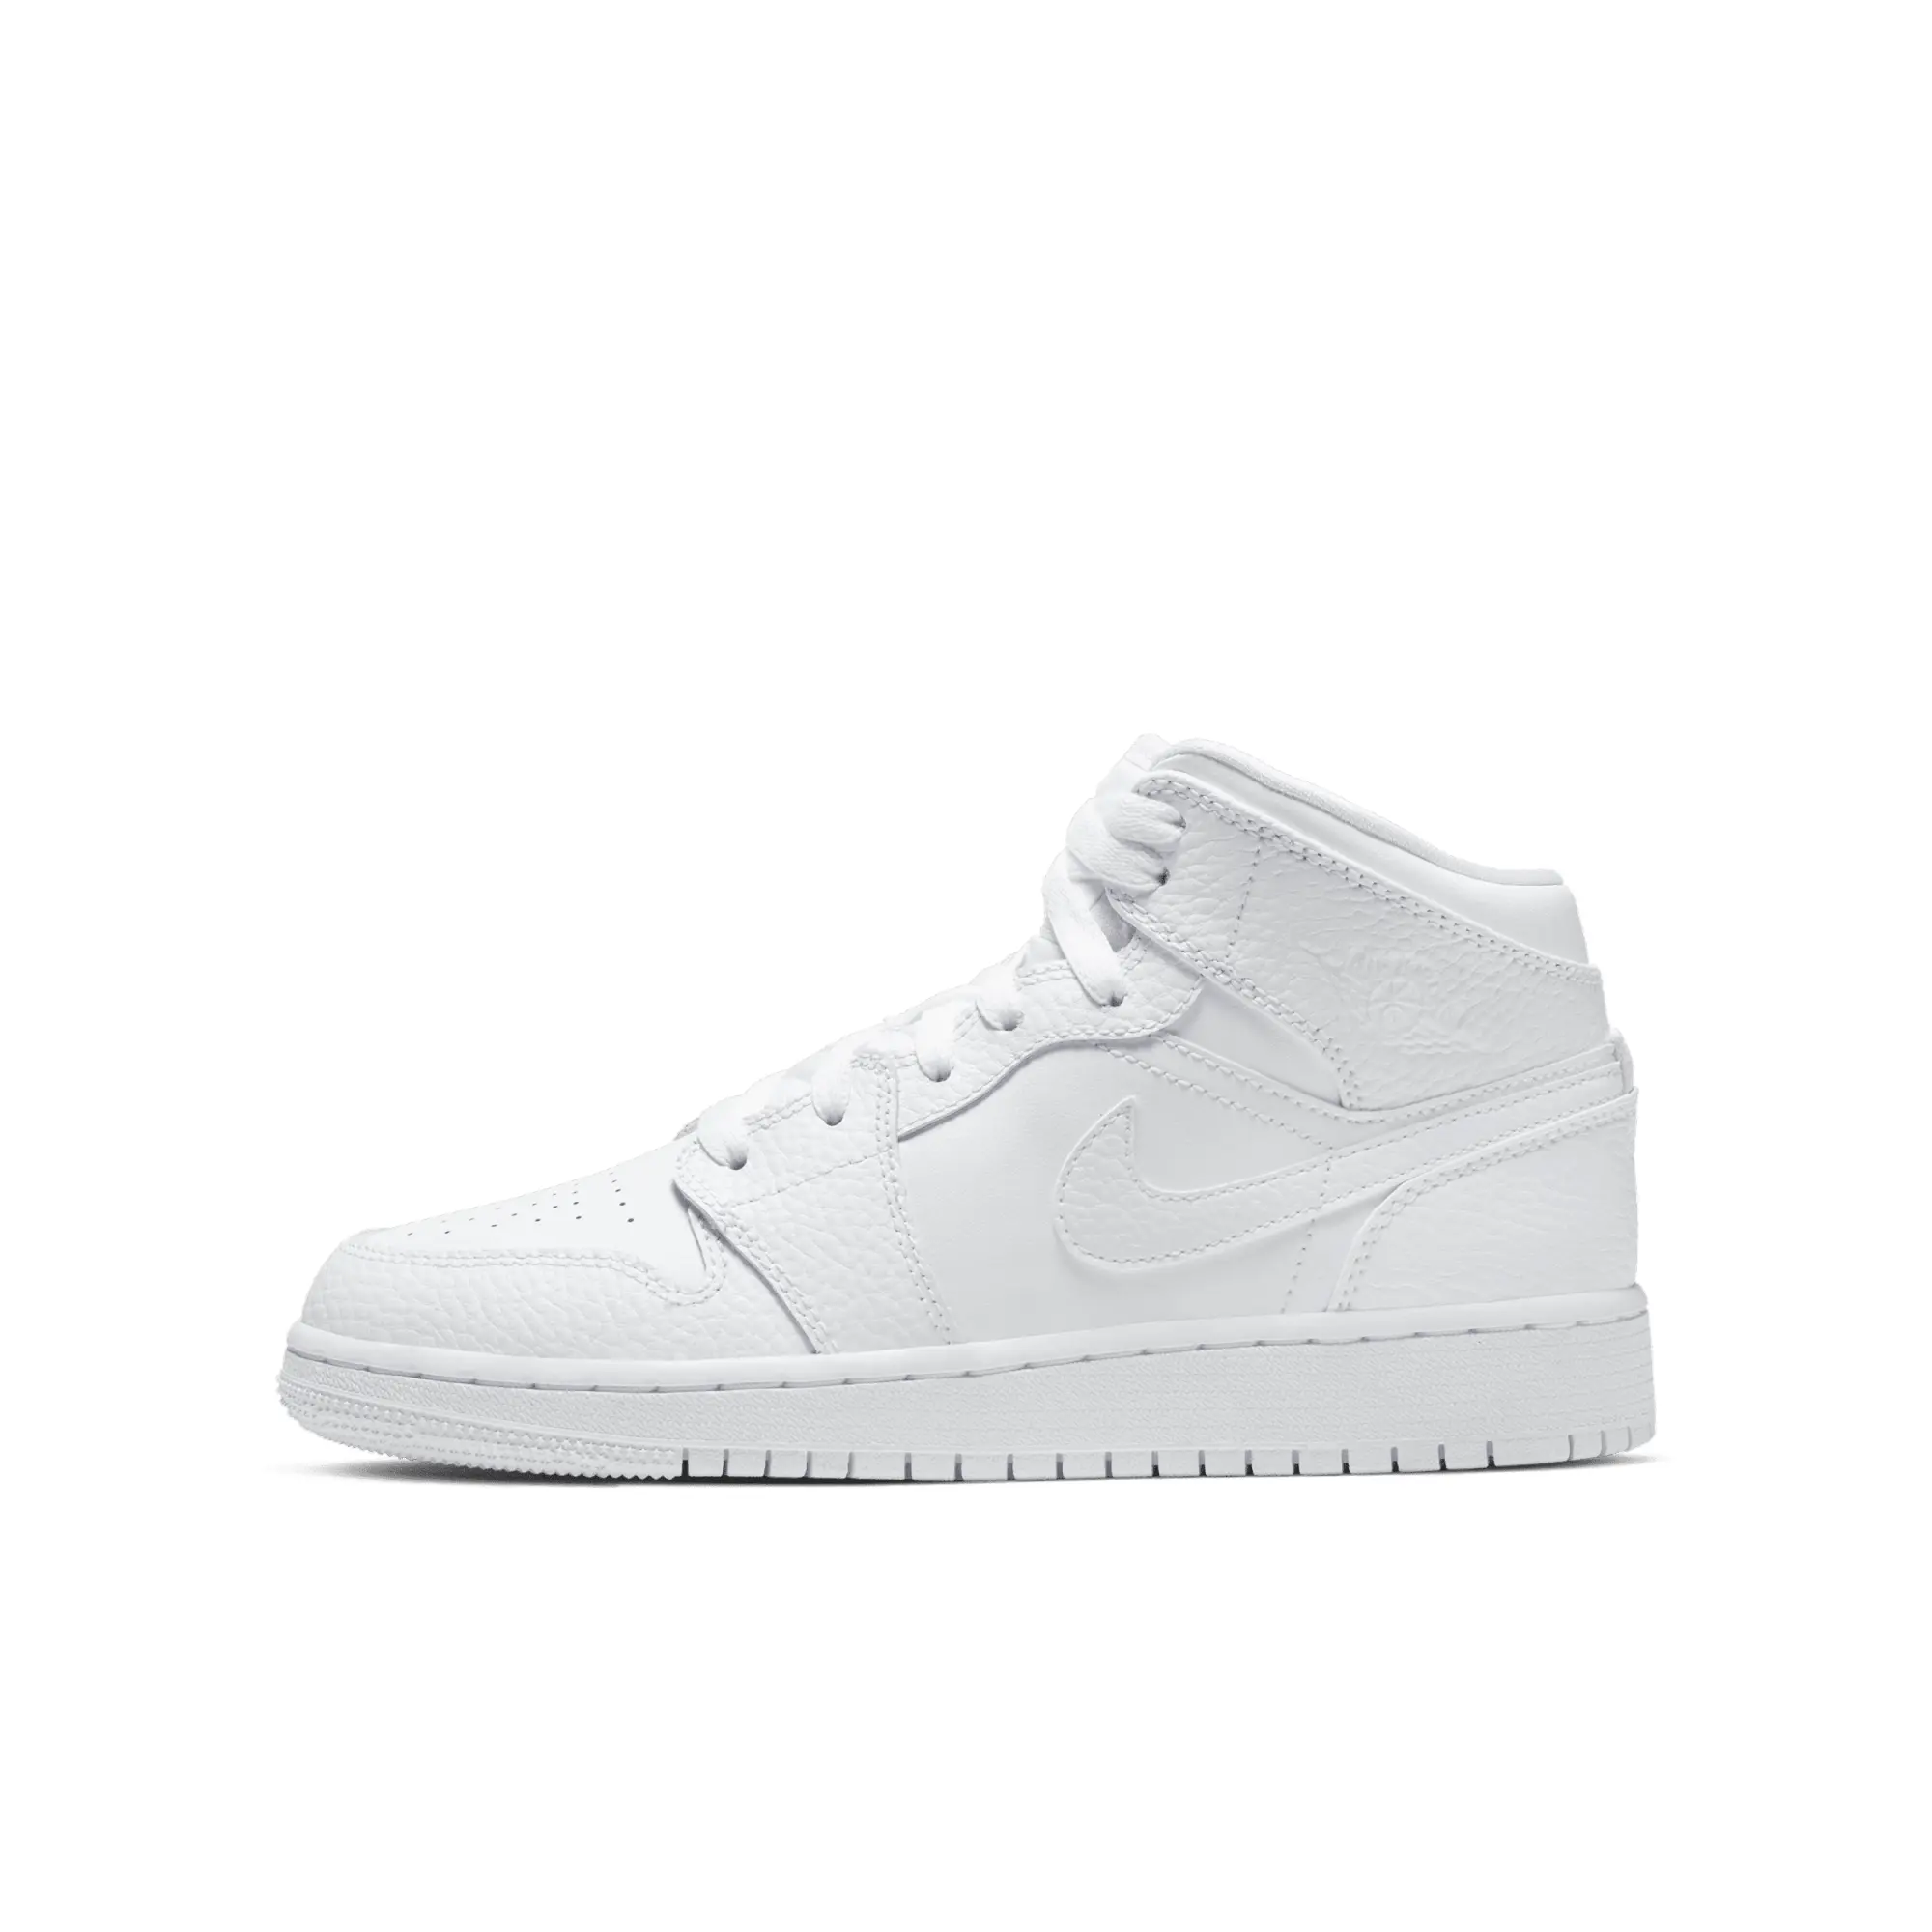 Nike Jordan Jordan Air 1 Mid Tumbled Leather Junior - White